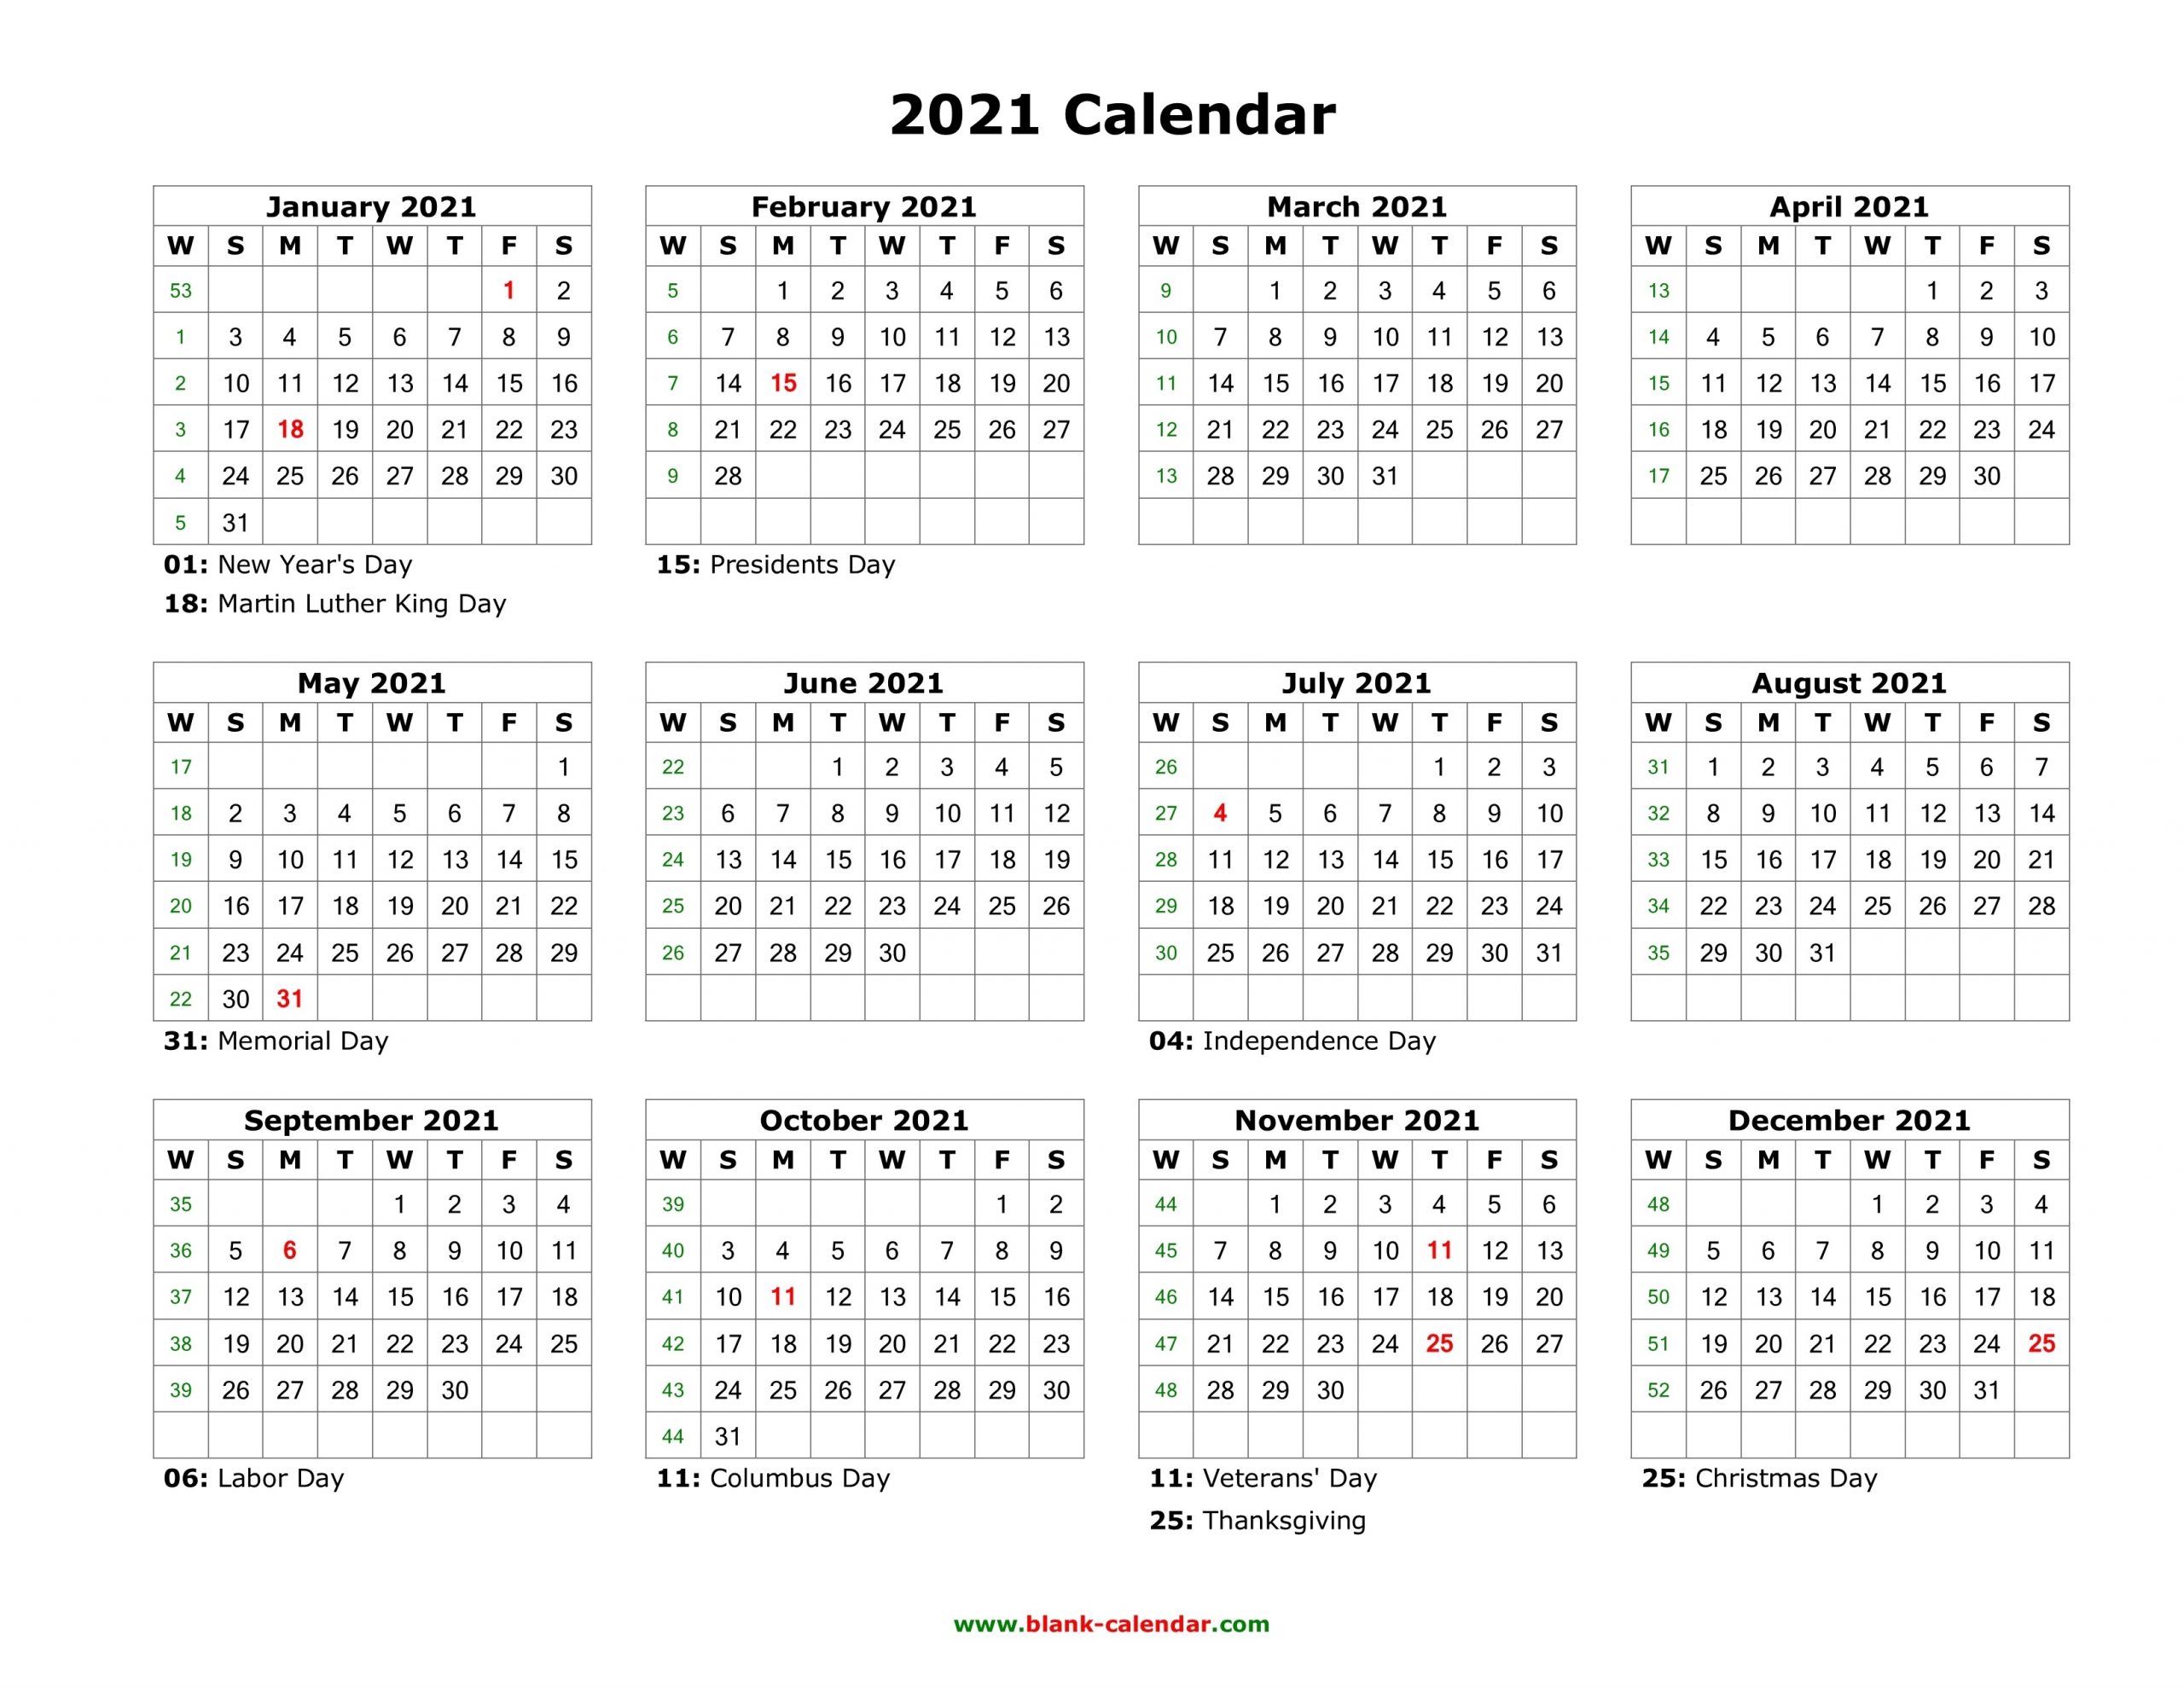 Blank Calendar 2021 | Free Download Calendar Templates-Editable Calendar Template 2021